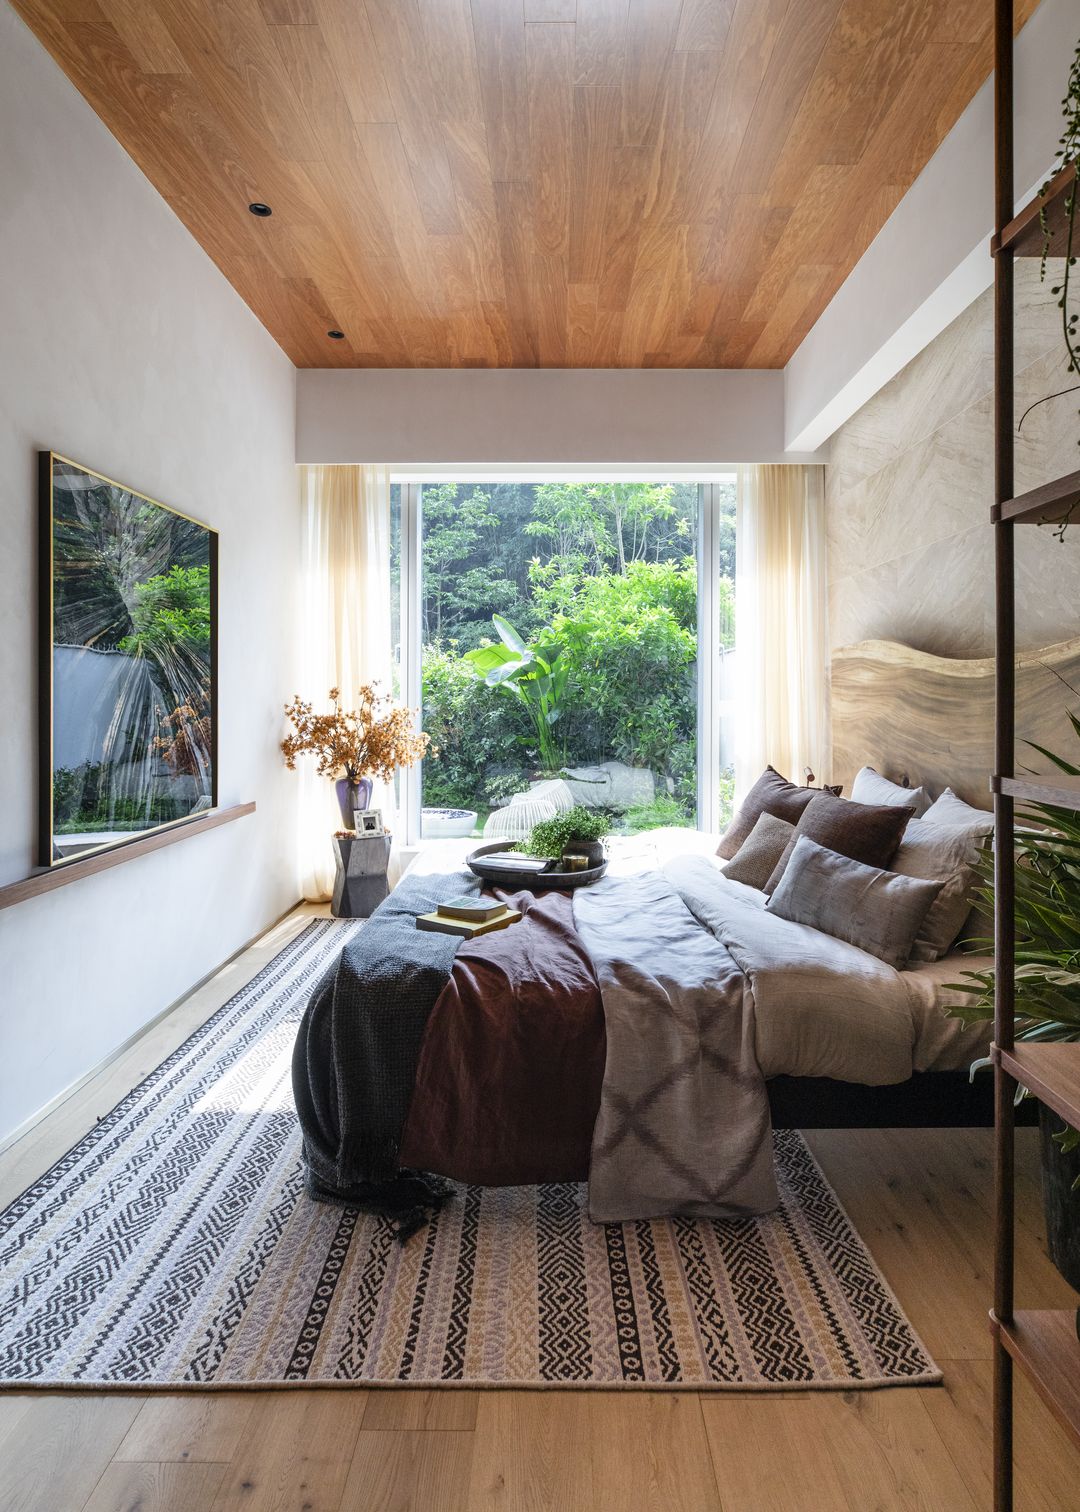 nonagon-style-n9s-liquid-interiors-mount-pavilia-bedroom-bed-natural-neutral-tones-wood-ceiling-rug-plants.jpg